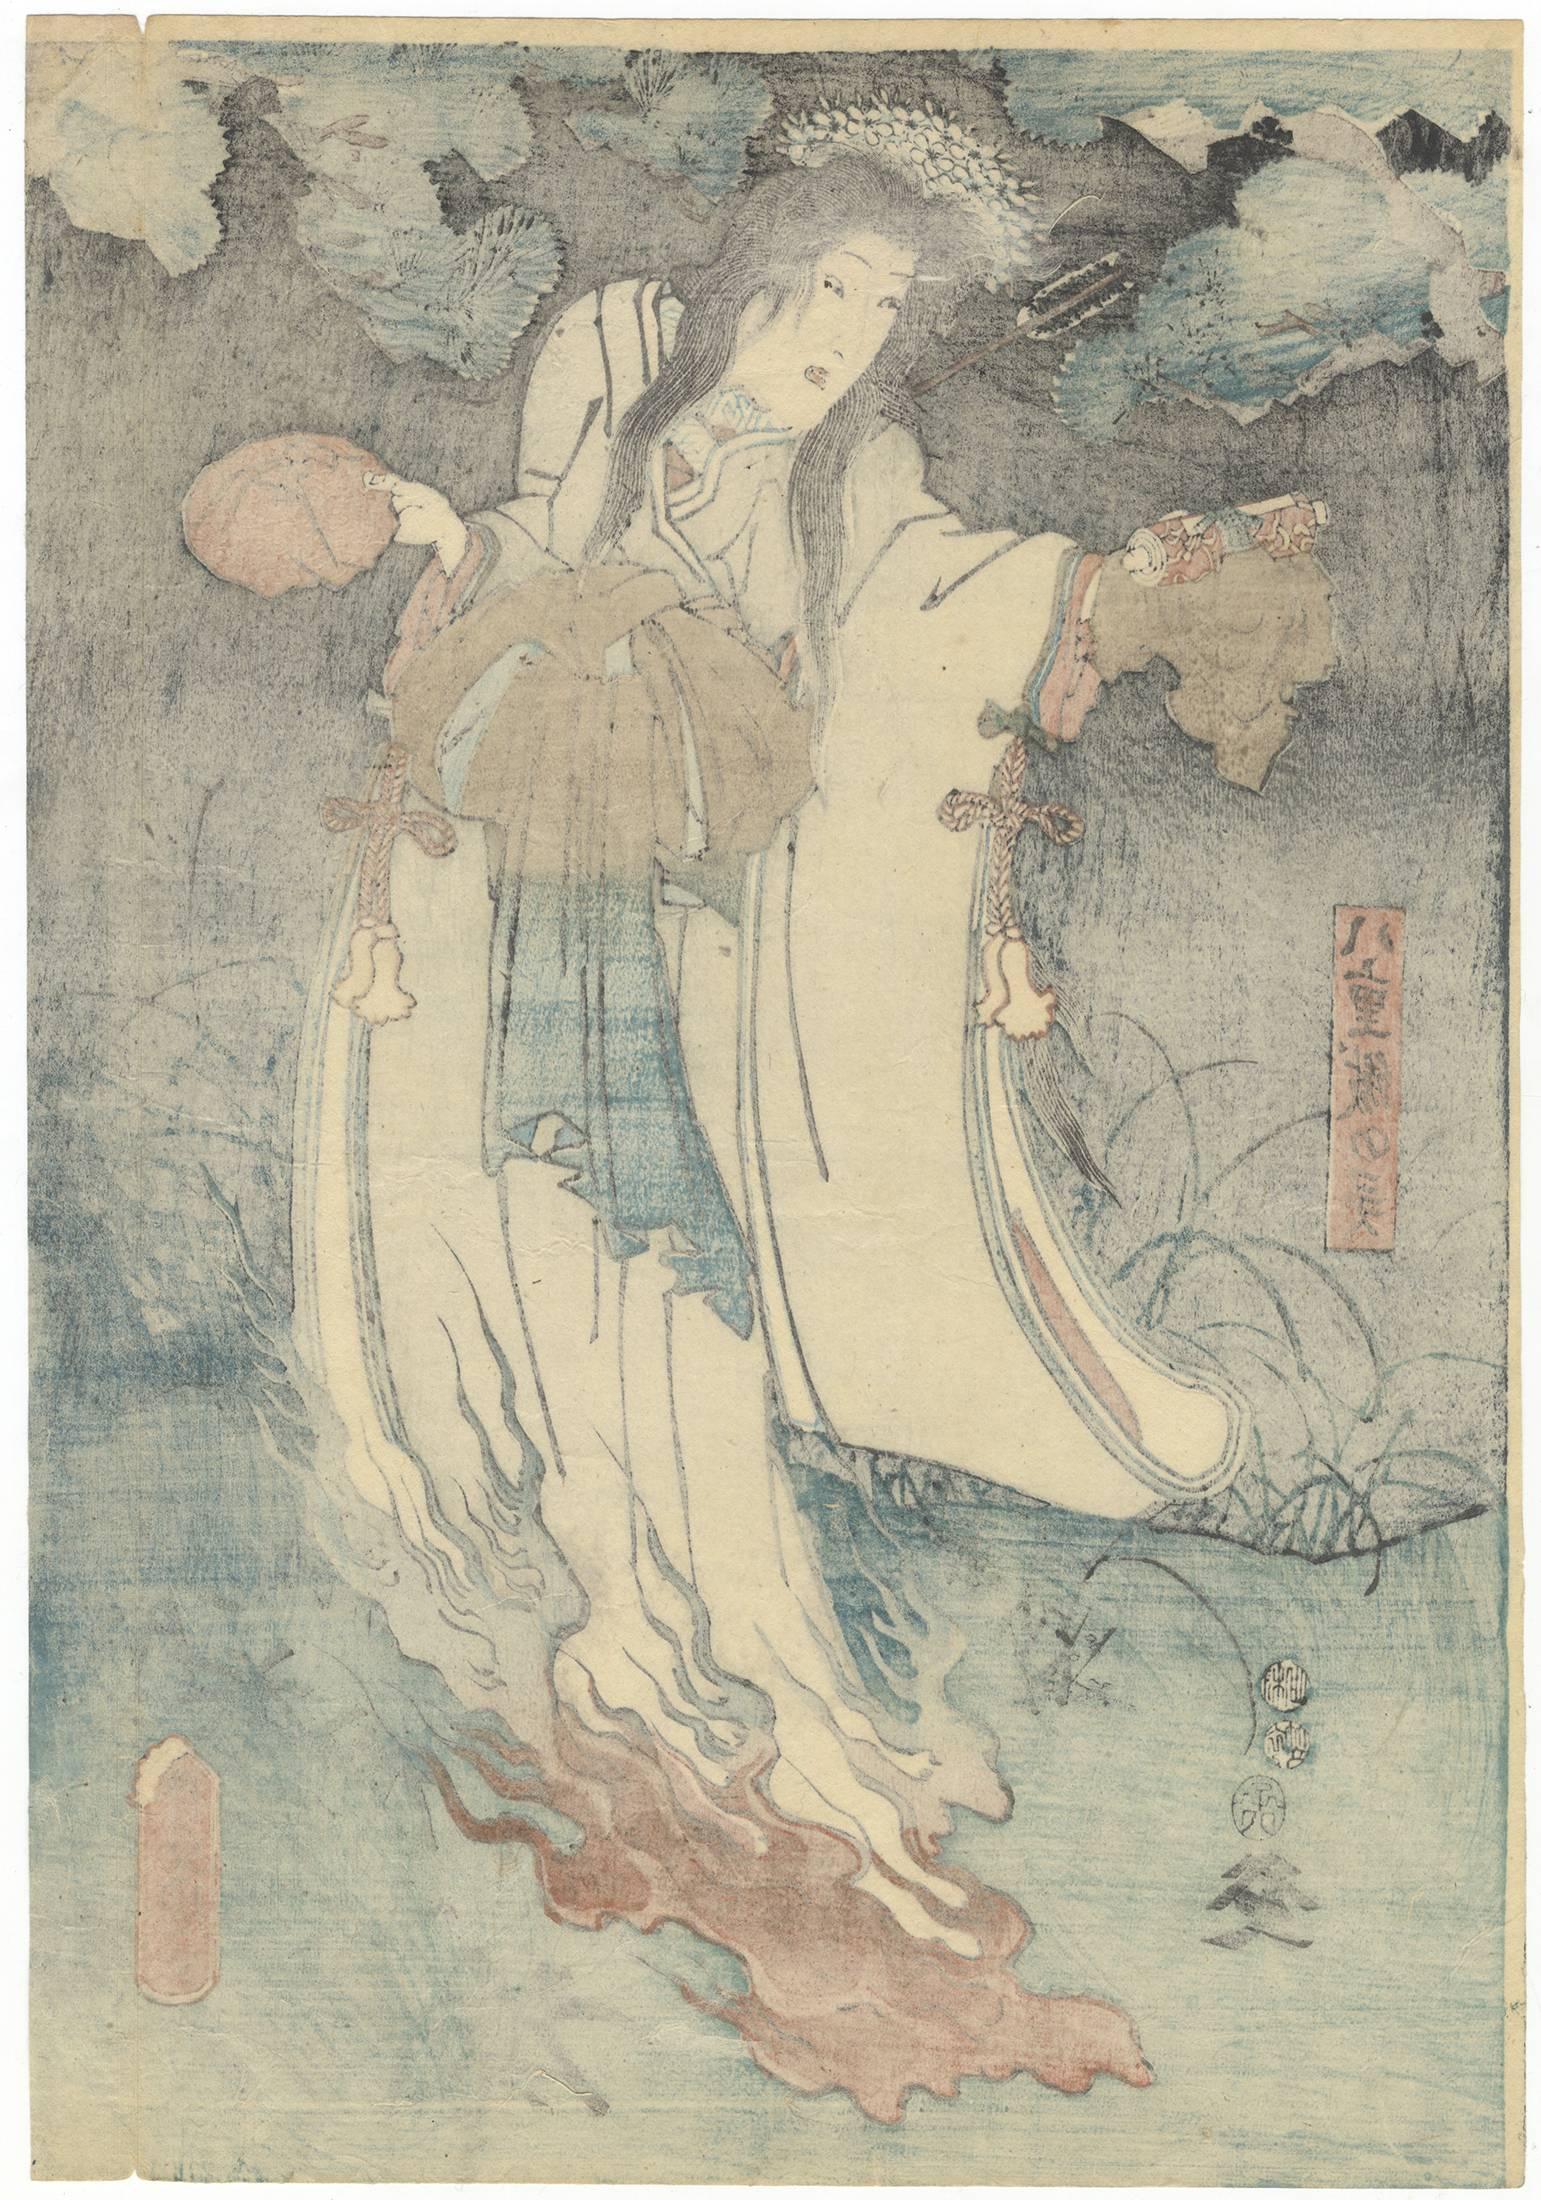 Artist: Toyokuni III Utagawa (1877-1945)
Title: The Spirit of Princess Yaegaki, Kabuki play: Otogi banashi hakata no imaori
Date: 1852
Publisher: Yamamotoya Heikichi
Size: (R) 36.3 x 25.1 (C) 36 x 25.4 (L) 36.2 x 25.3 cm
Condition report: Vertical